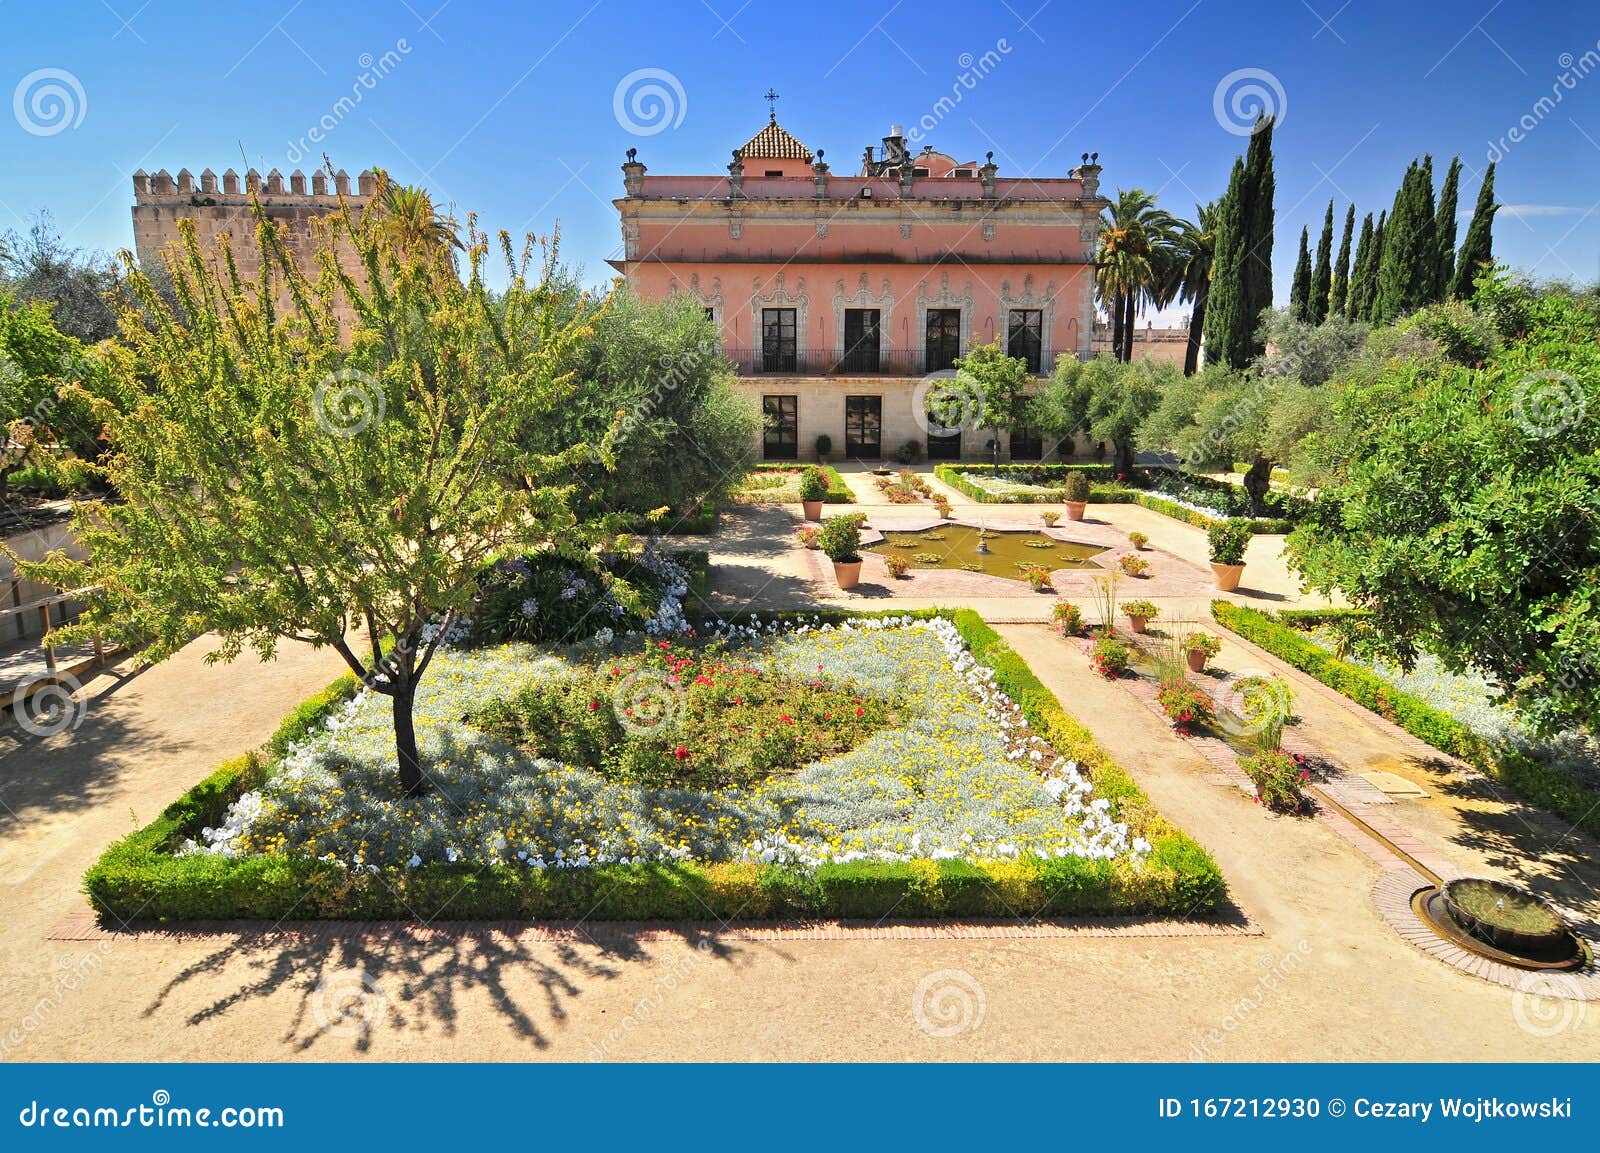 gardens in the alcazar de jerez, jerez de la frontera, andalusia, spain